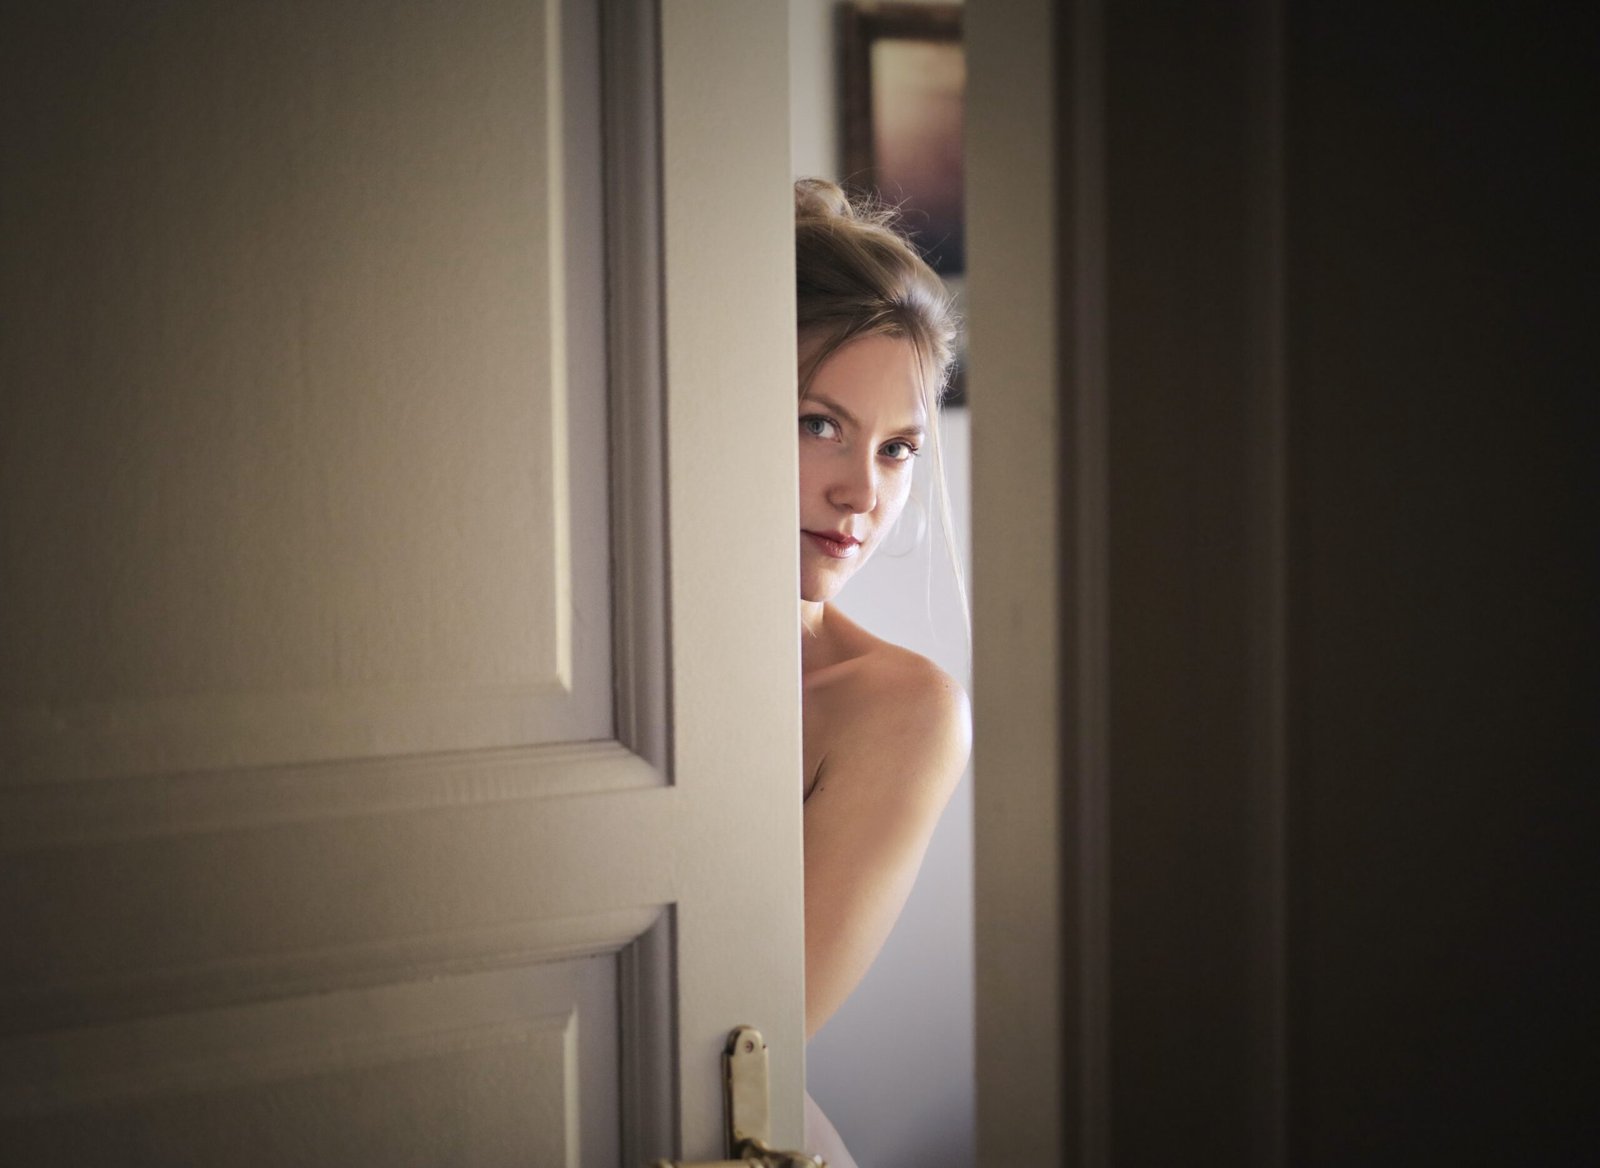 A woman peeking into a hidden room